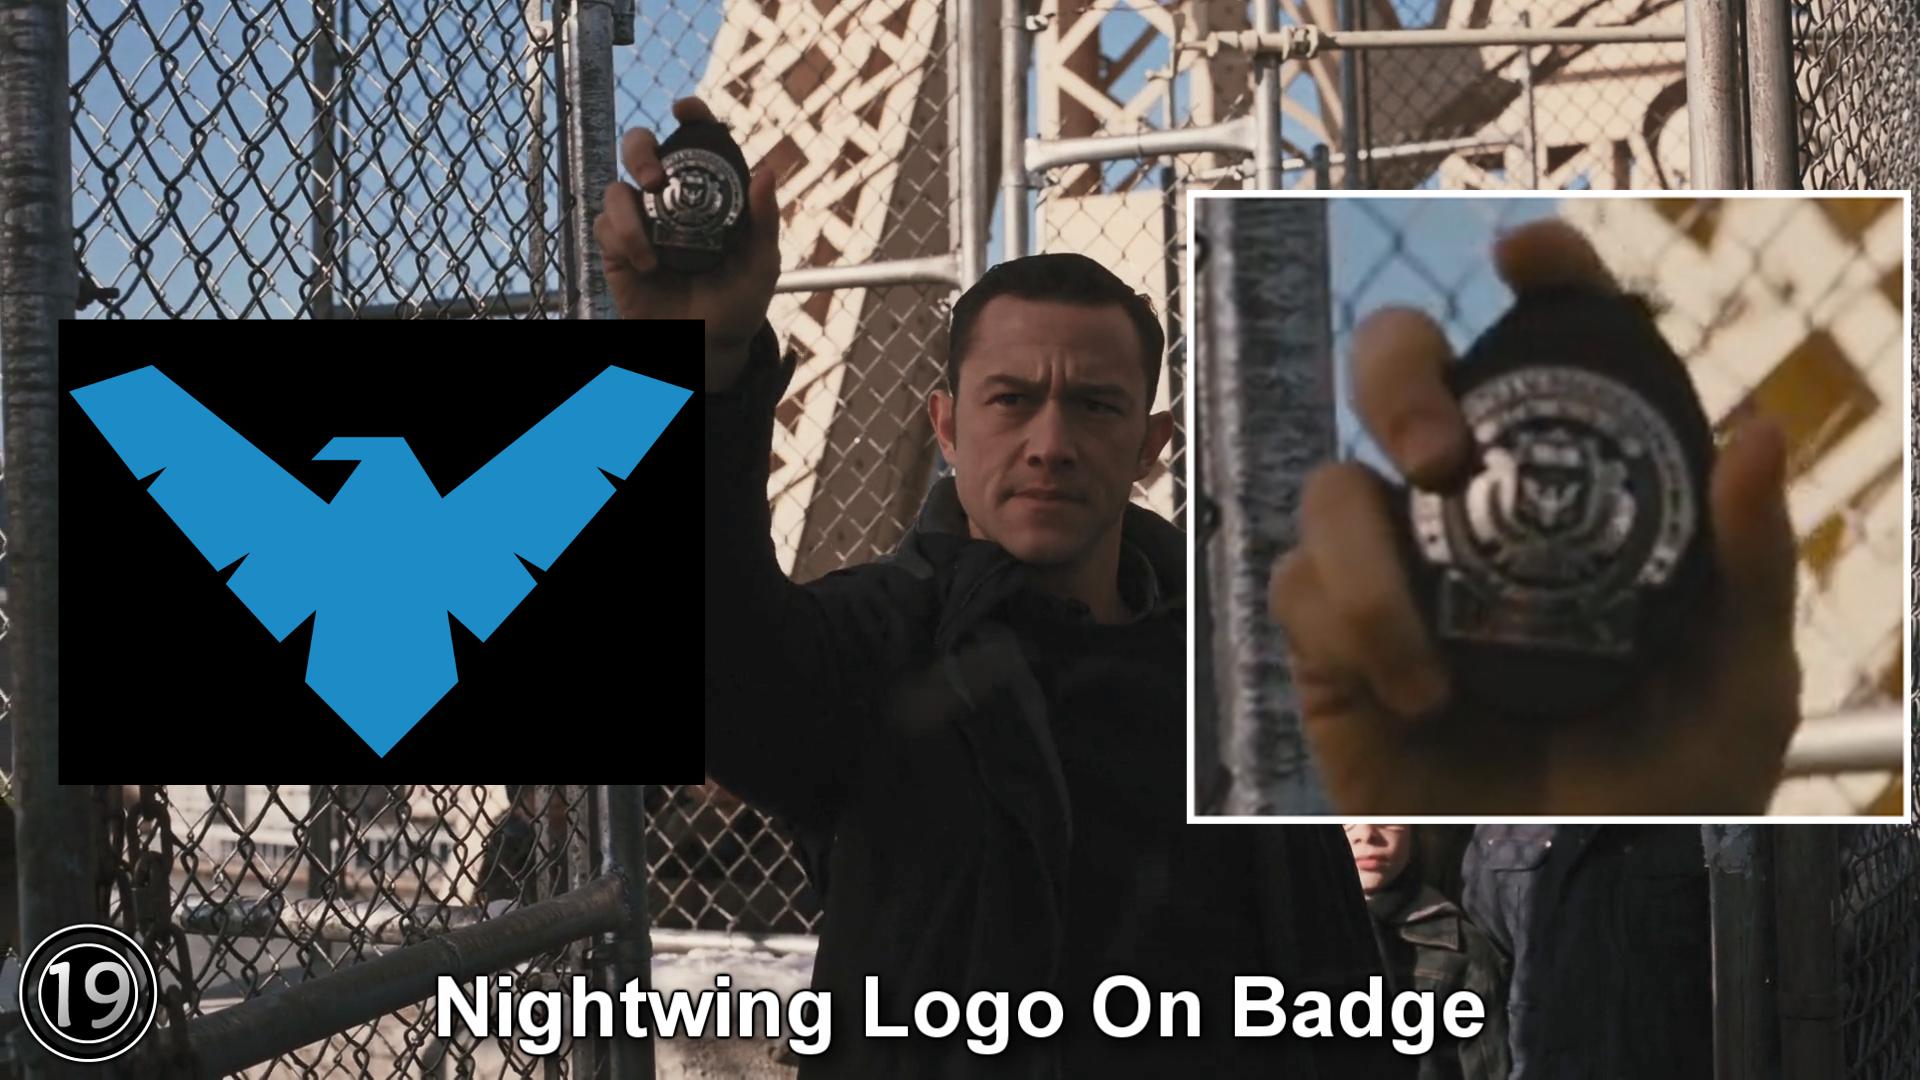 Nightwing Logo - Nightwing logo found on Blake's badge? From The Dark Knight Rises